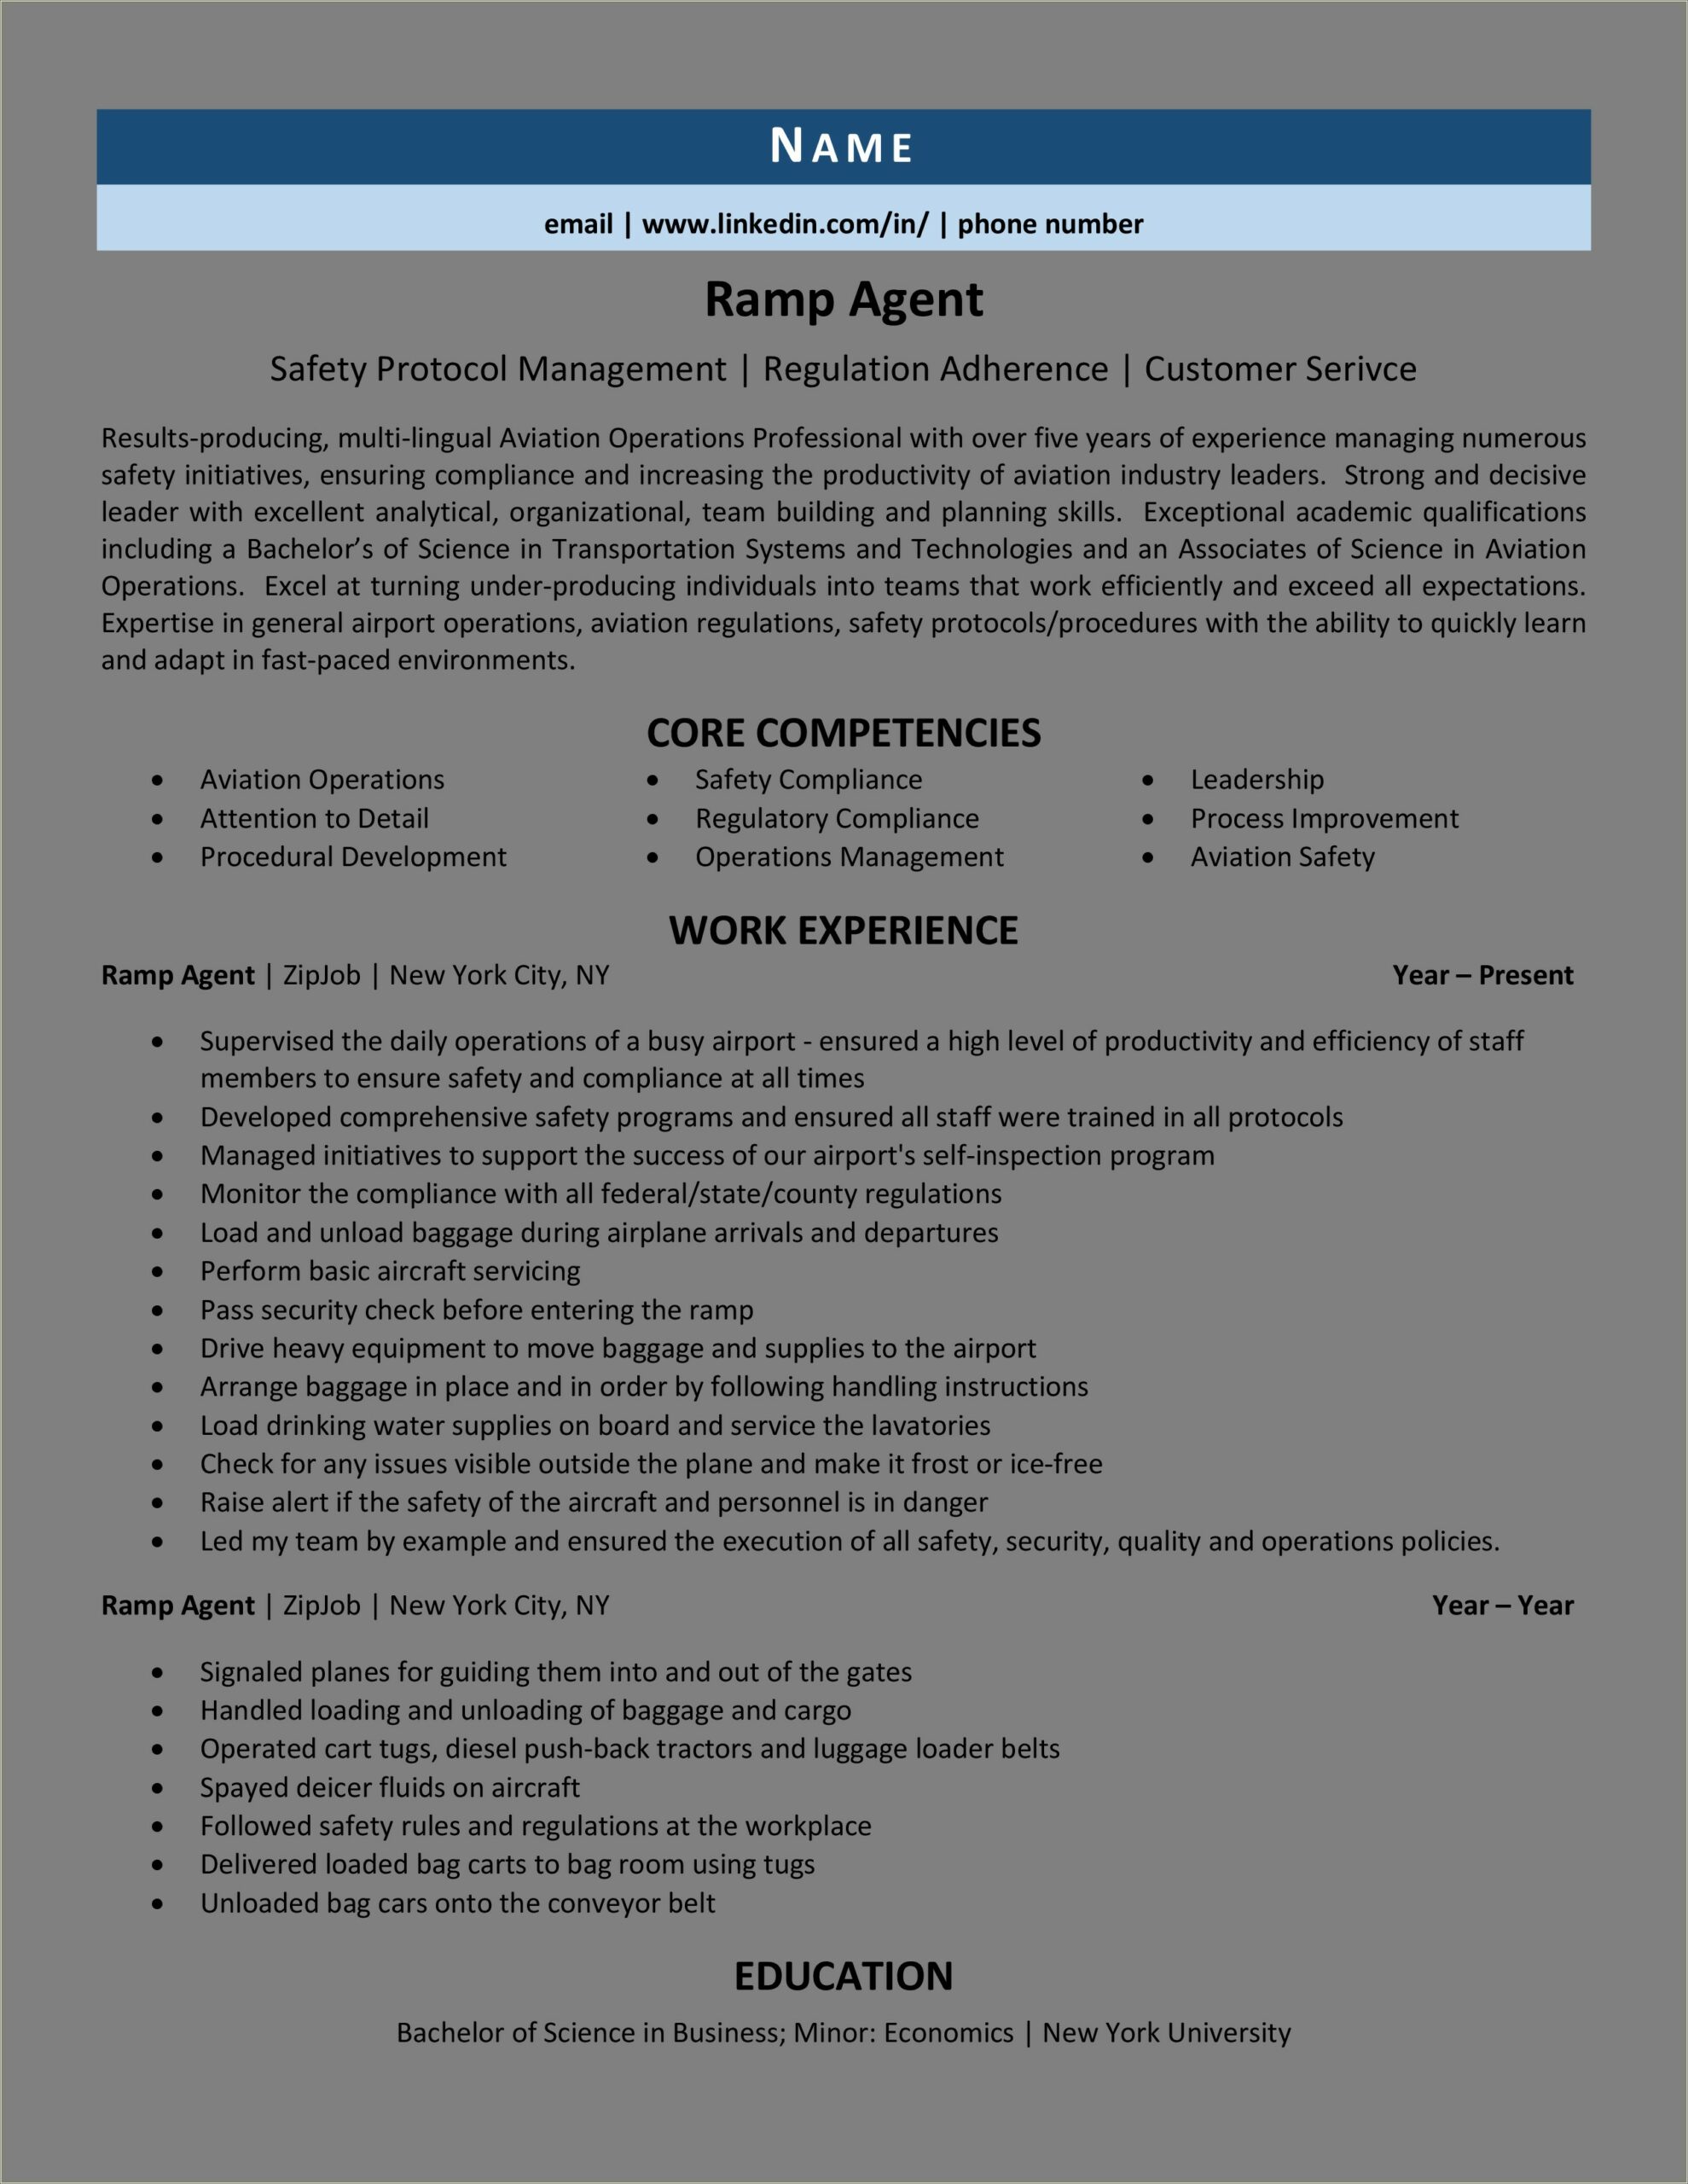 Ramp Agent Job Description For Resume